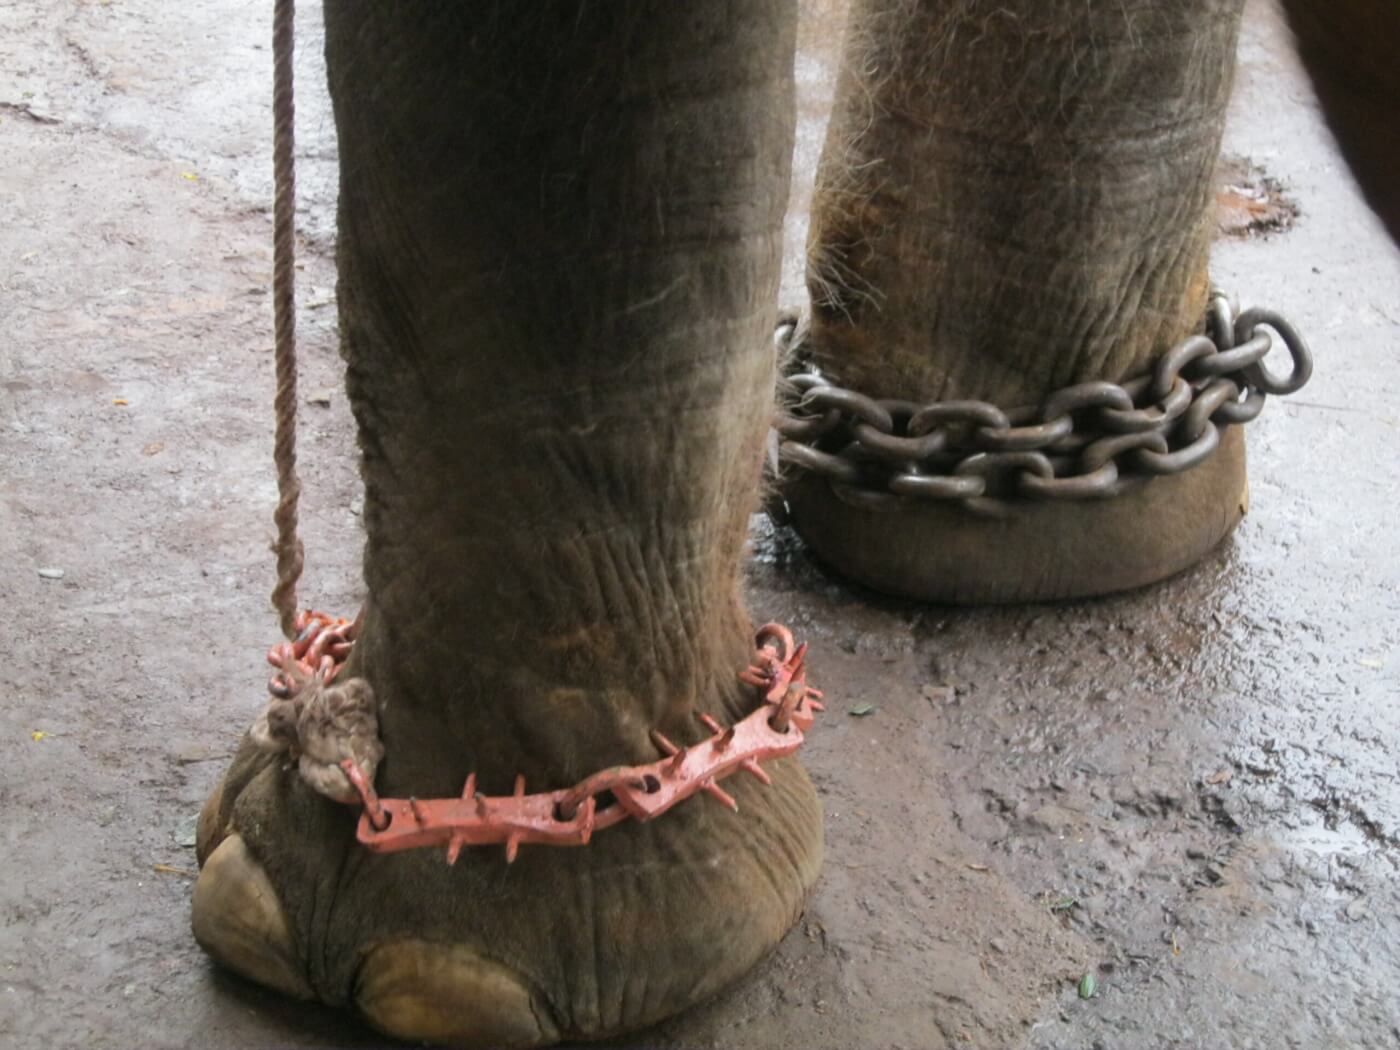 Help Spare Elephants From Cruel Performances